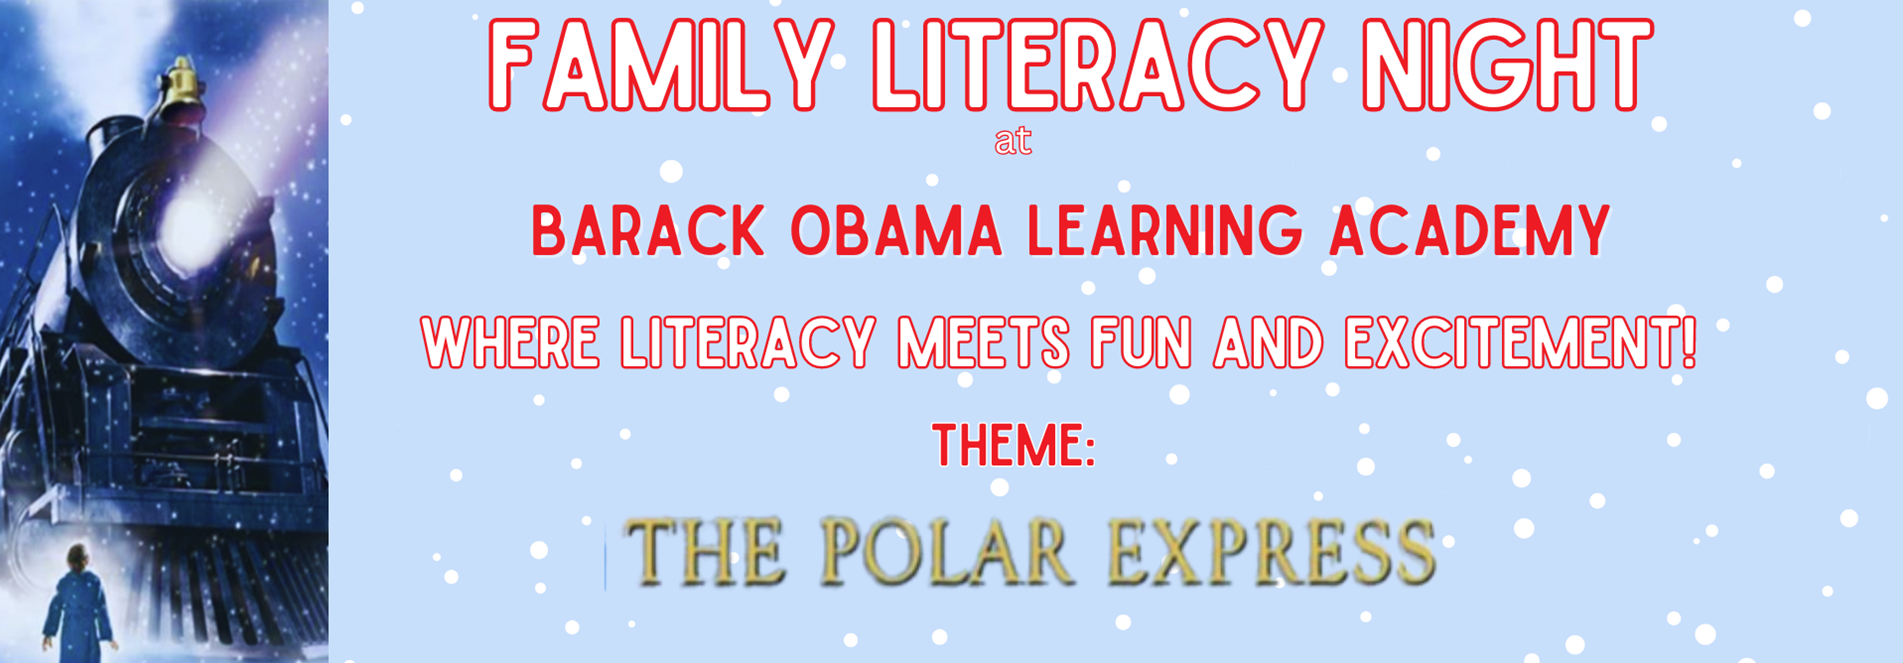 Polar Express at Barack Obama